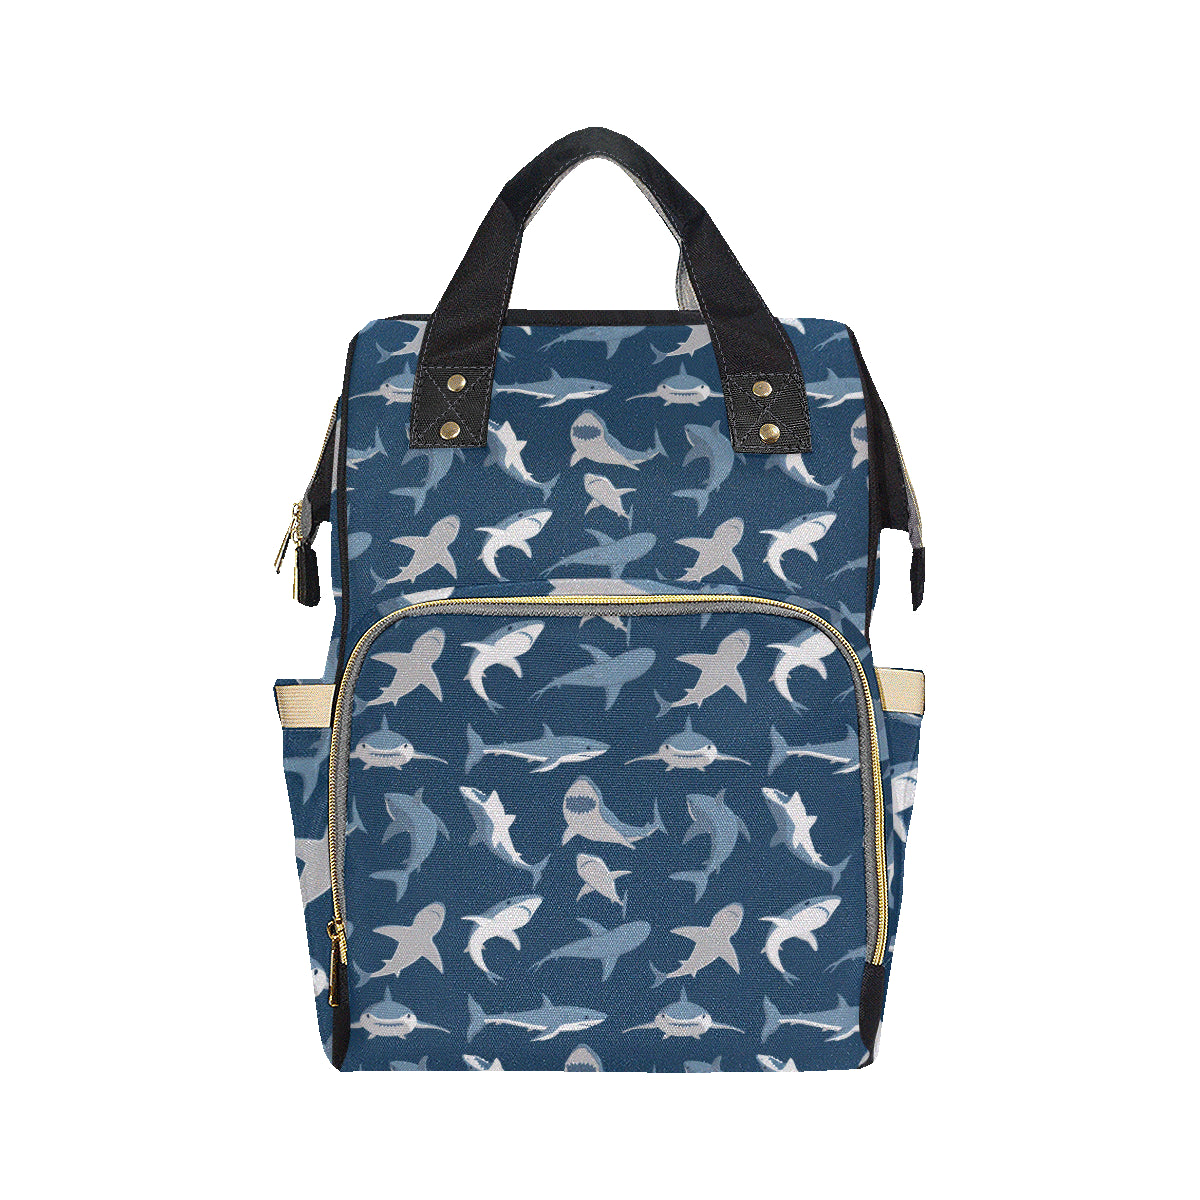 Shark Action Pattern Diaper Bag Backpack